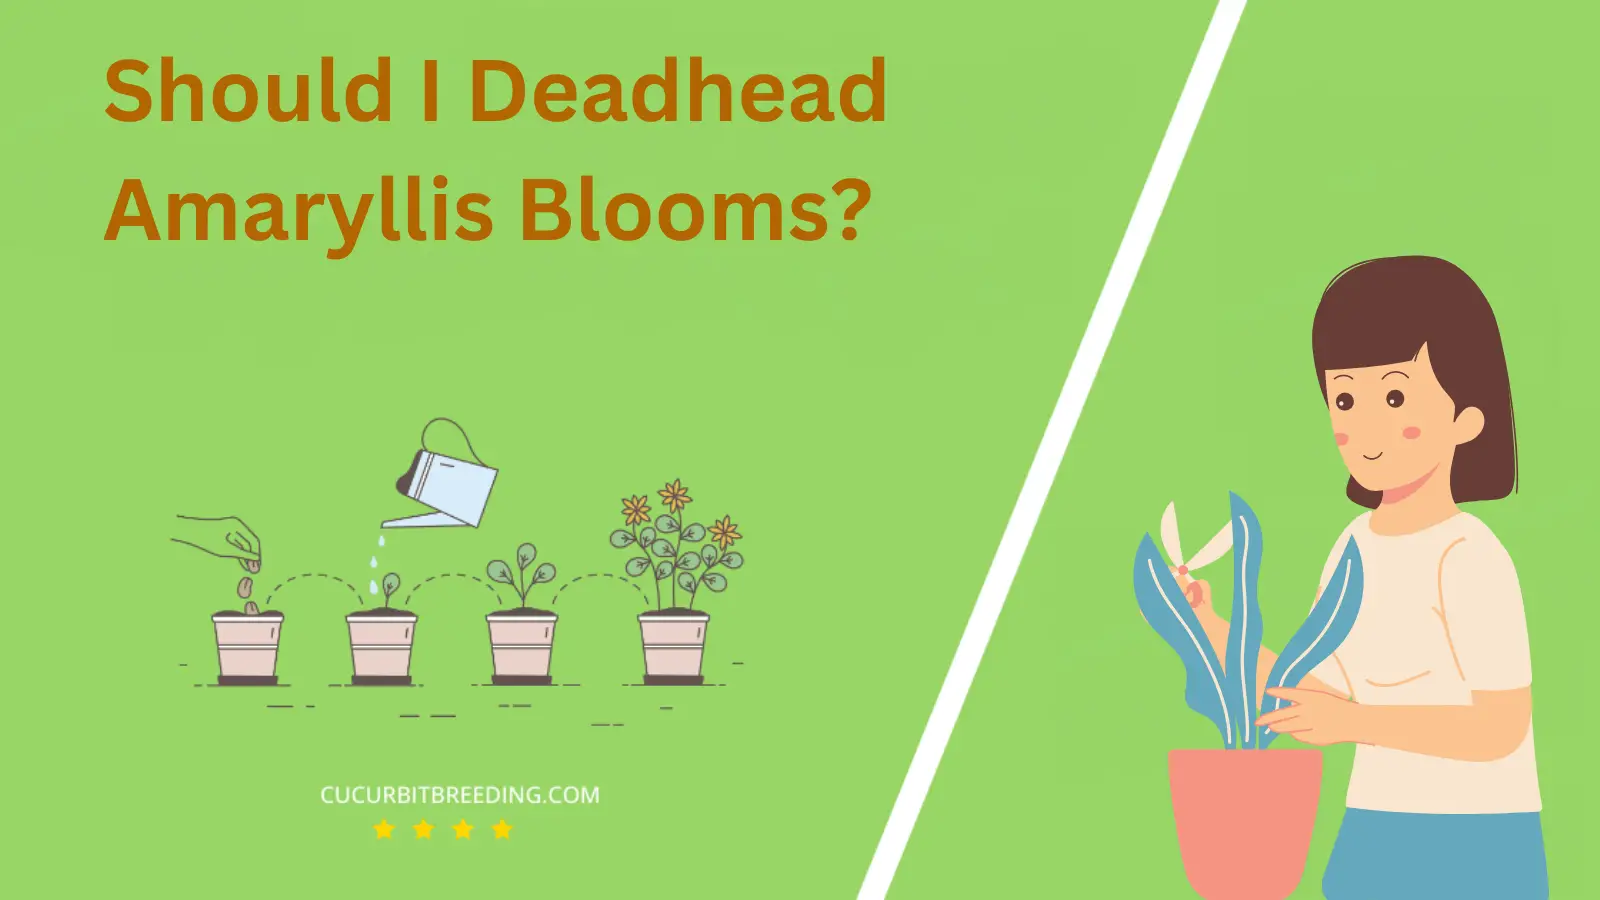 Should I Deadhead Amaryllis Blooms?